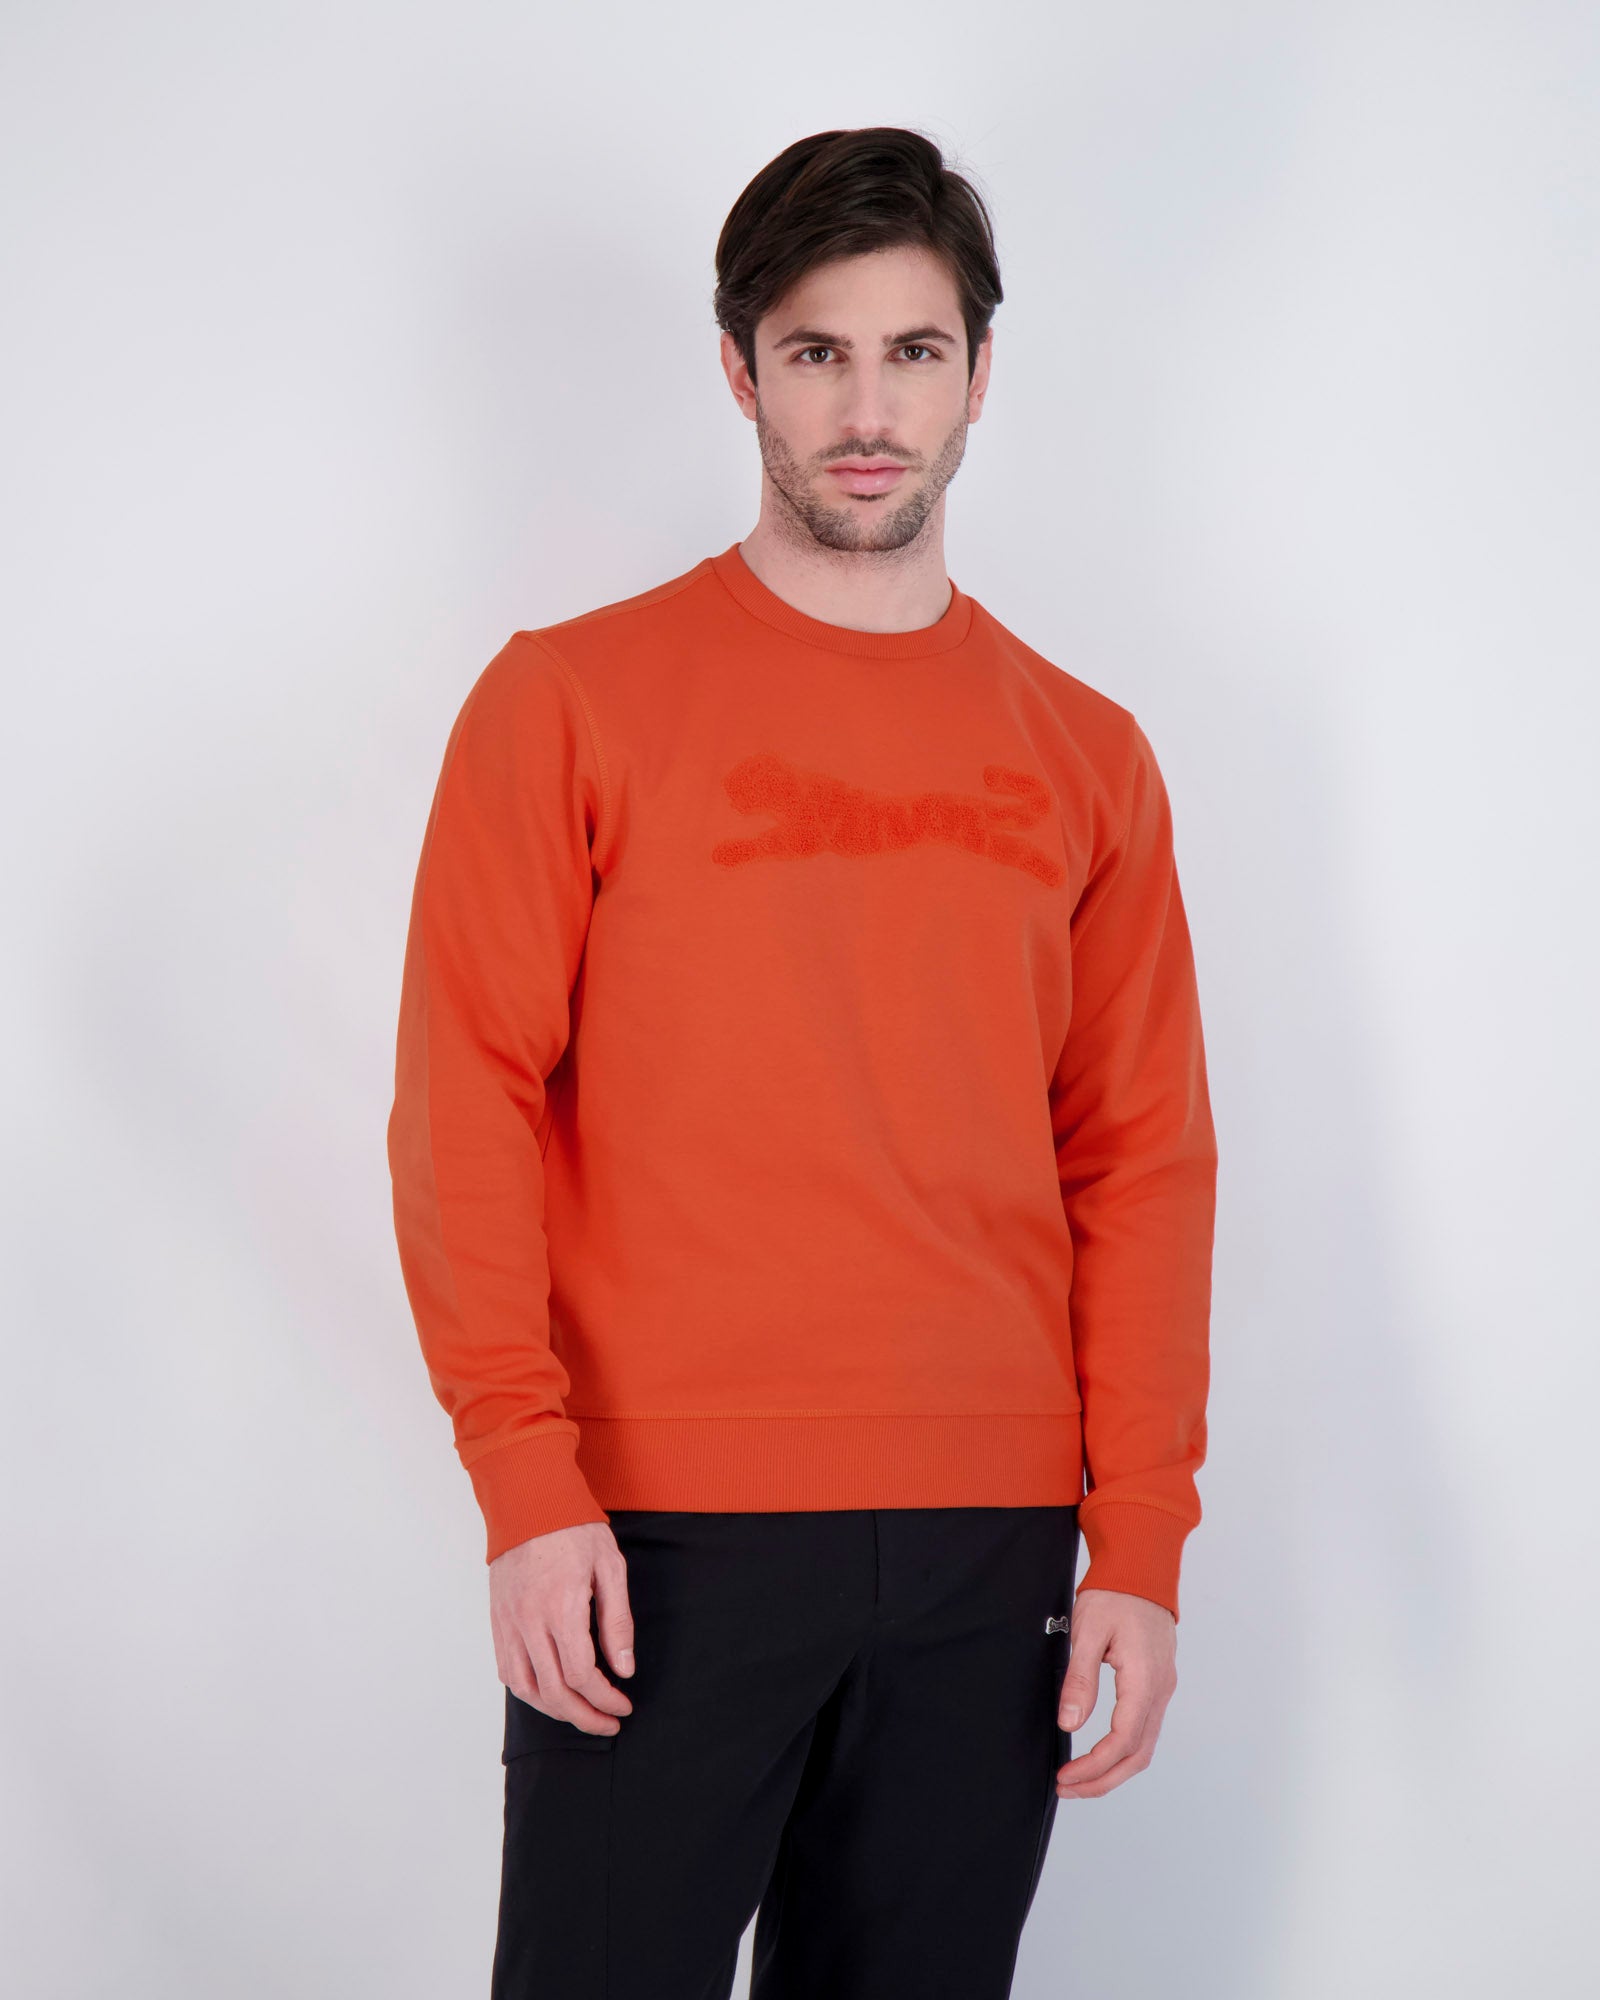 Unisex Sweatshirt Grey L Light Heather Grey M Men Orange Red Orange S Sweatshirt unisex women XL